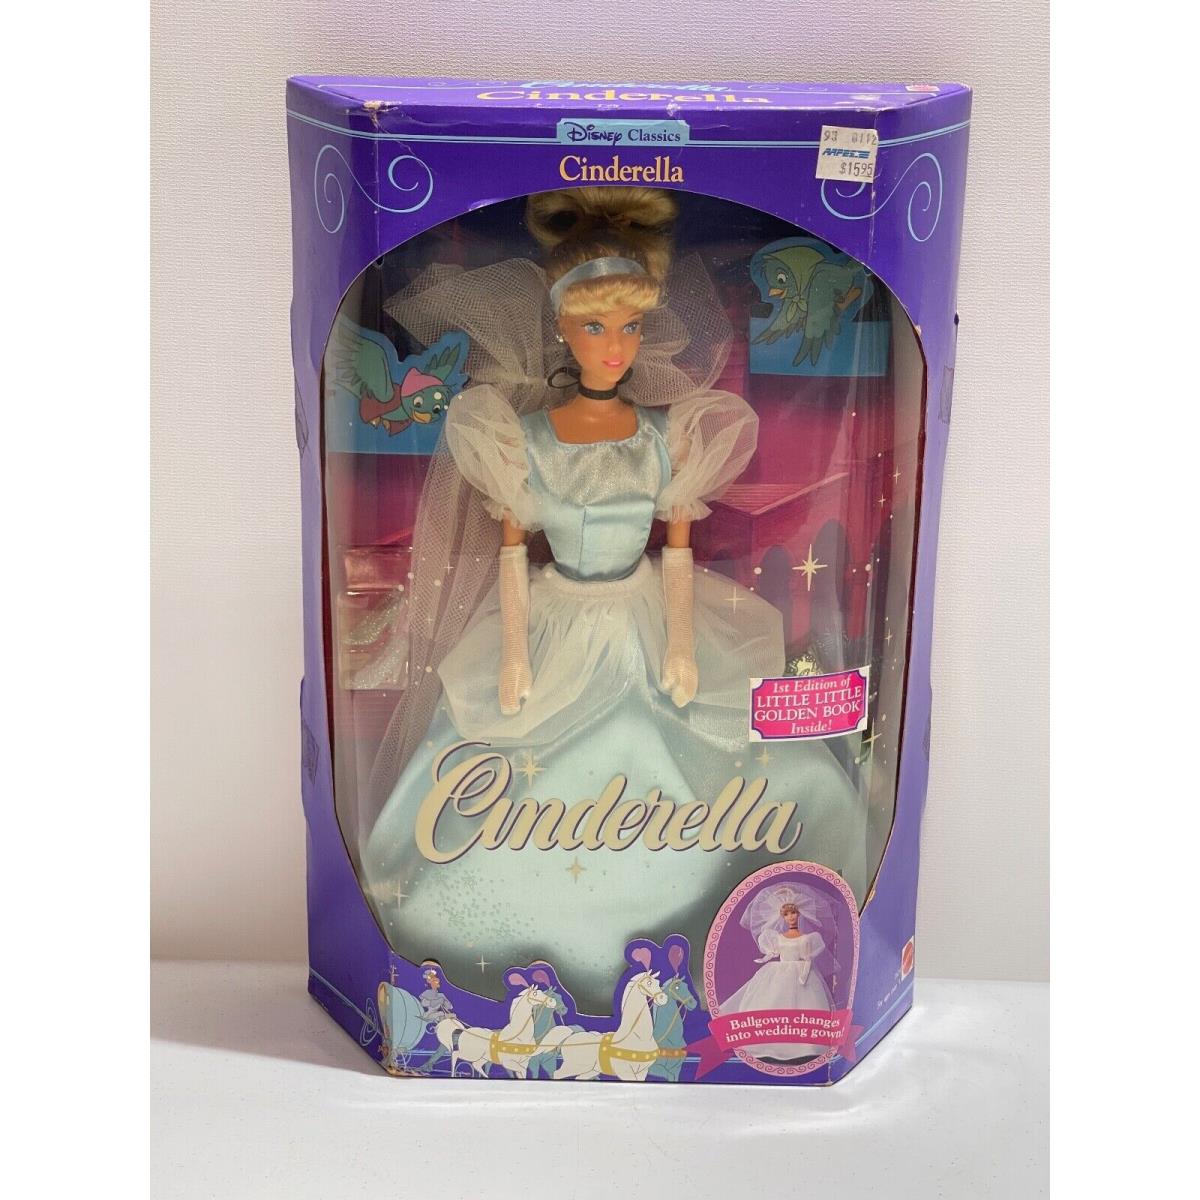 Vintage 1991 Mattel Disney Classics Cinderella Doll IN Box B1